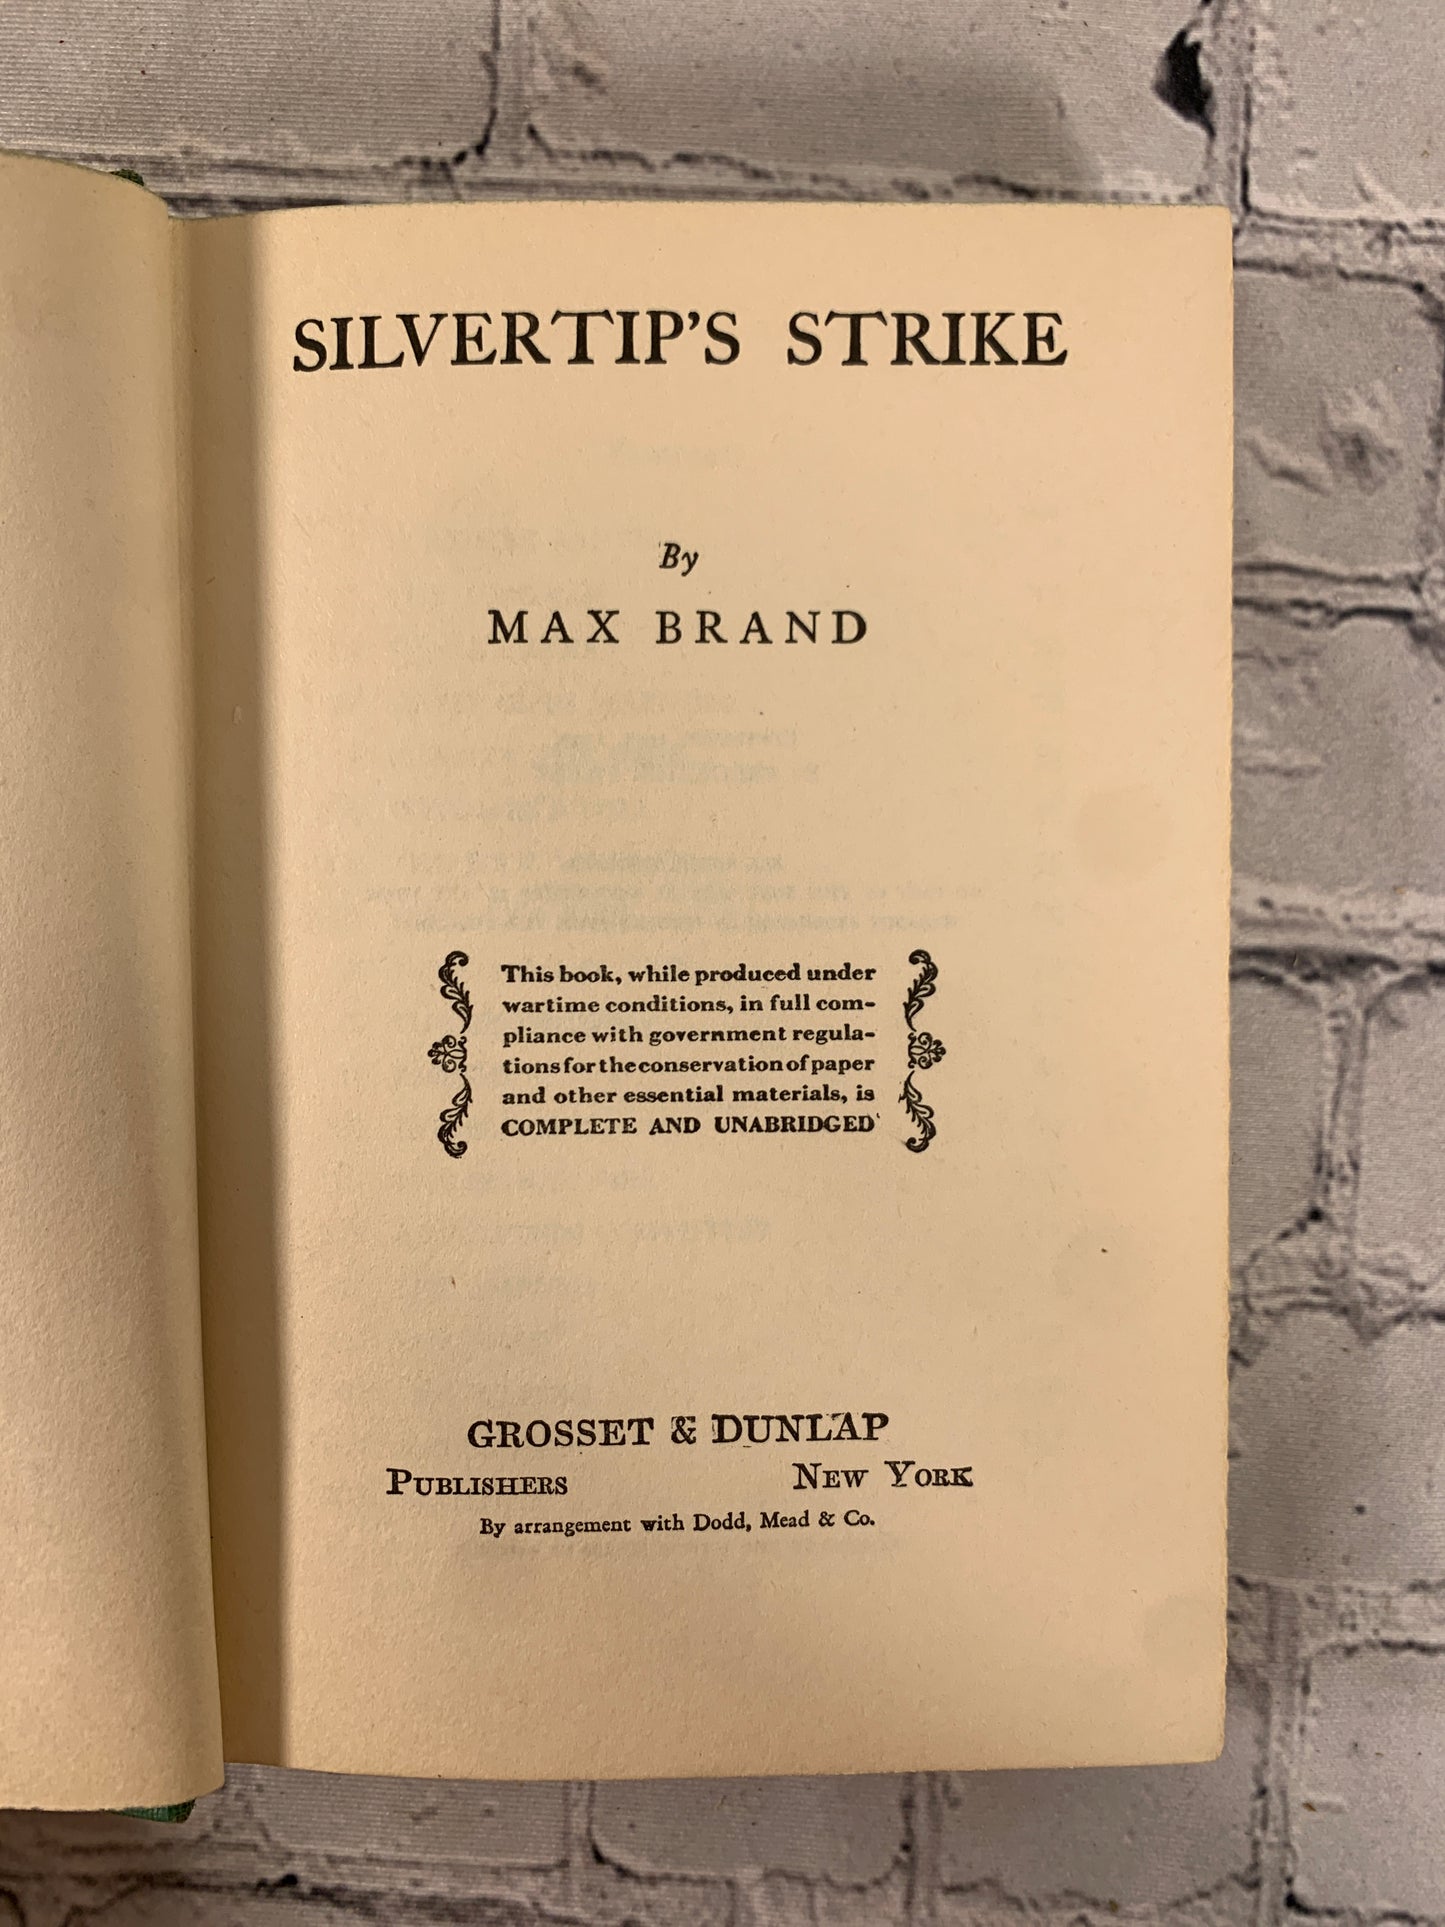 Silvertip's Strike by Max Brand [1942]